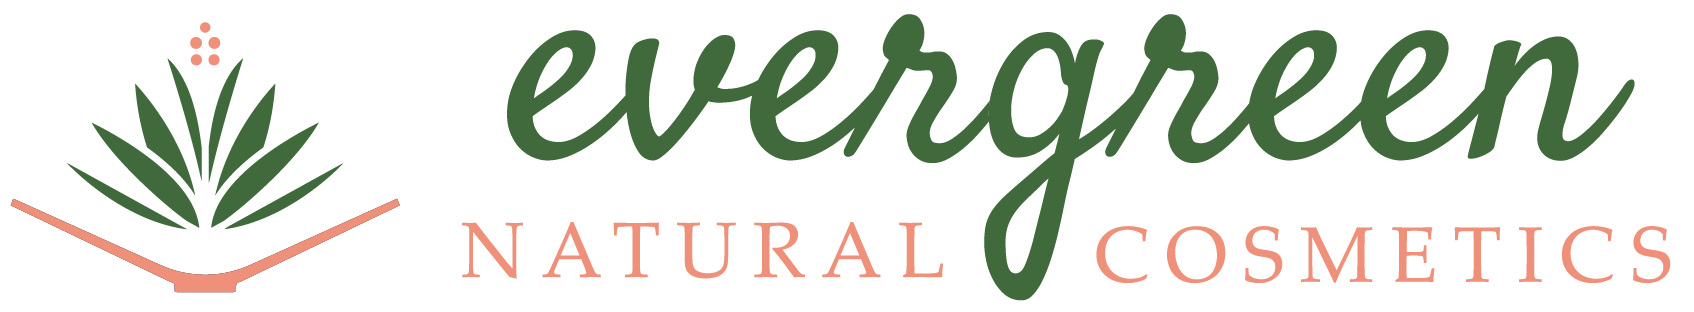 Evergreen Natural Cosmetics Logo